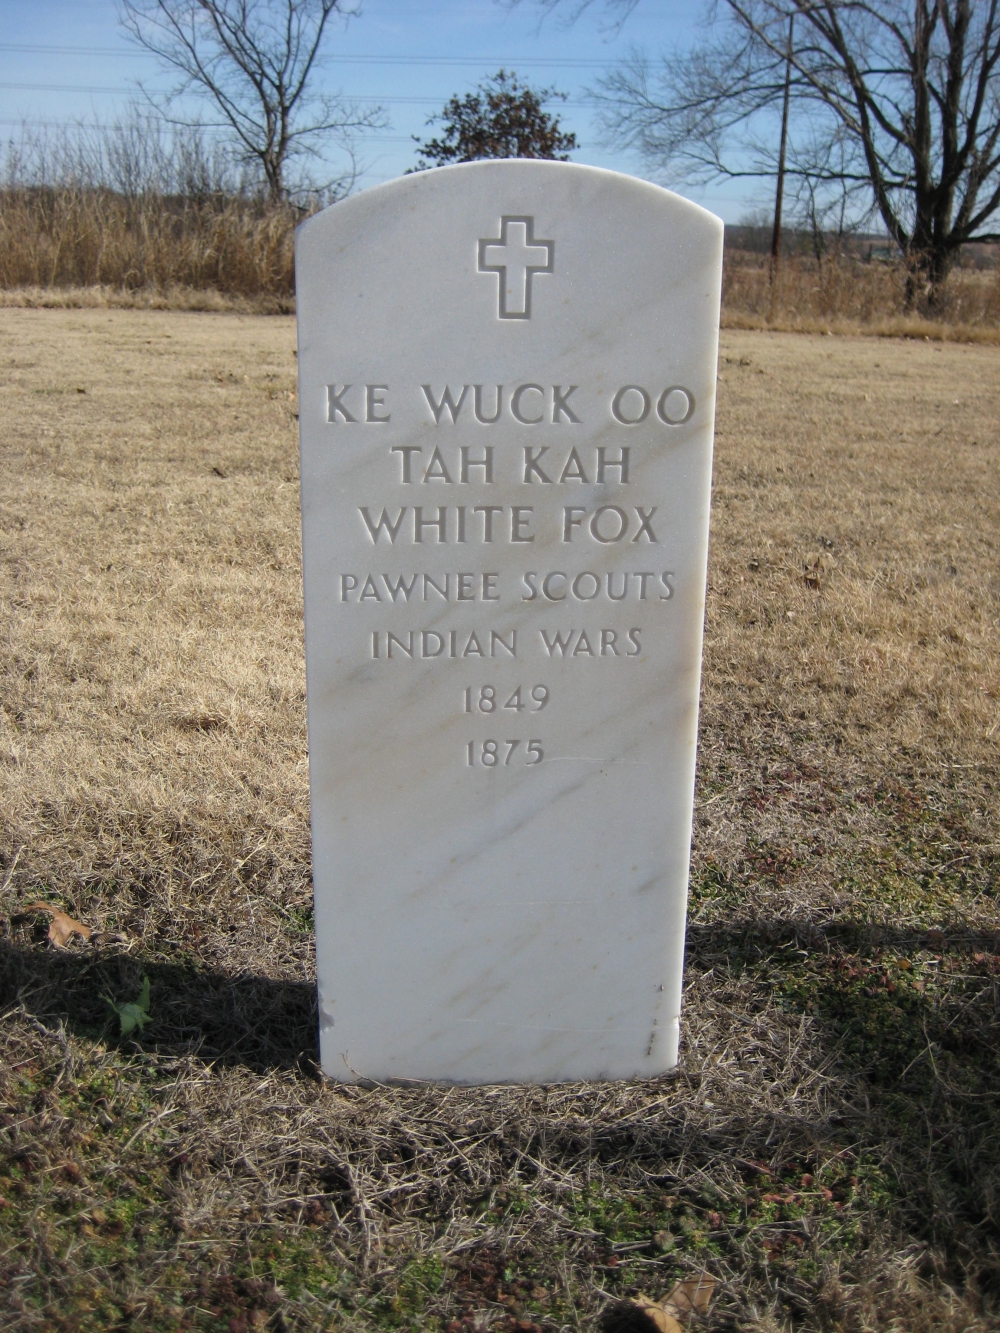 Pawnee, Oklahoma - Highland Cemetery Pawnee Scouts Memorial